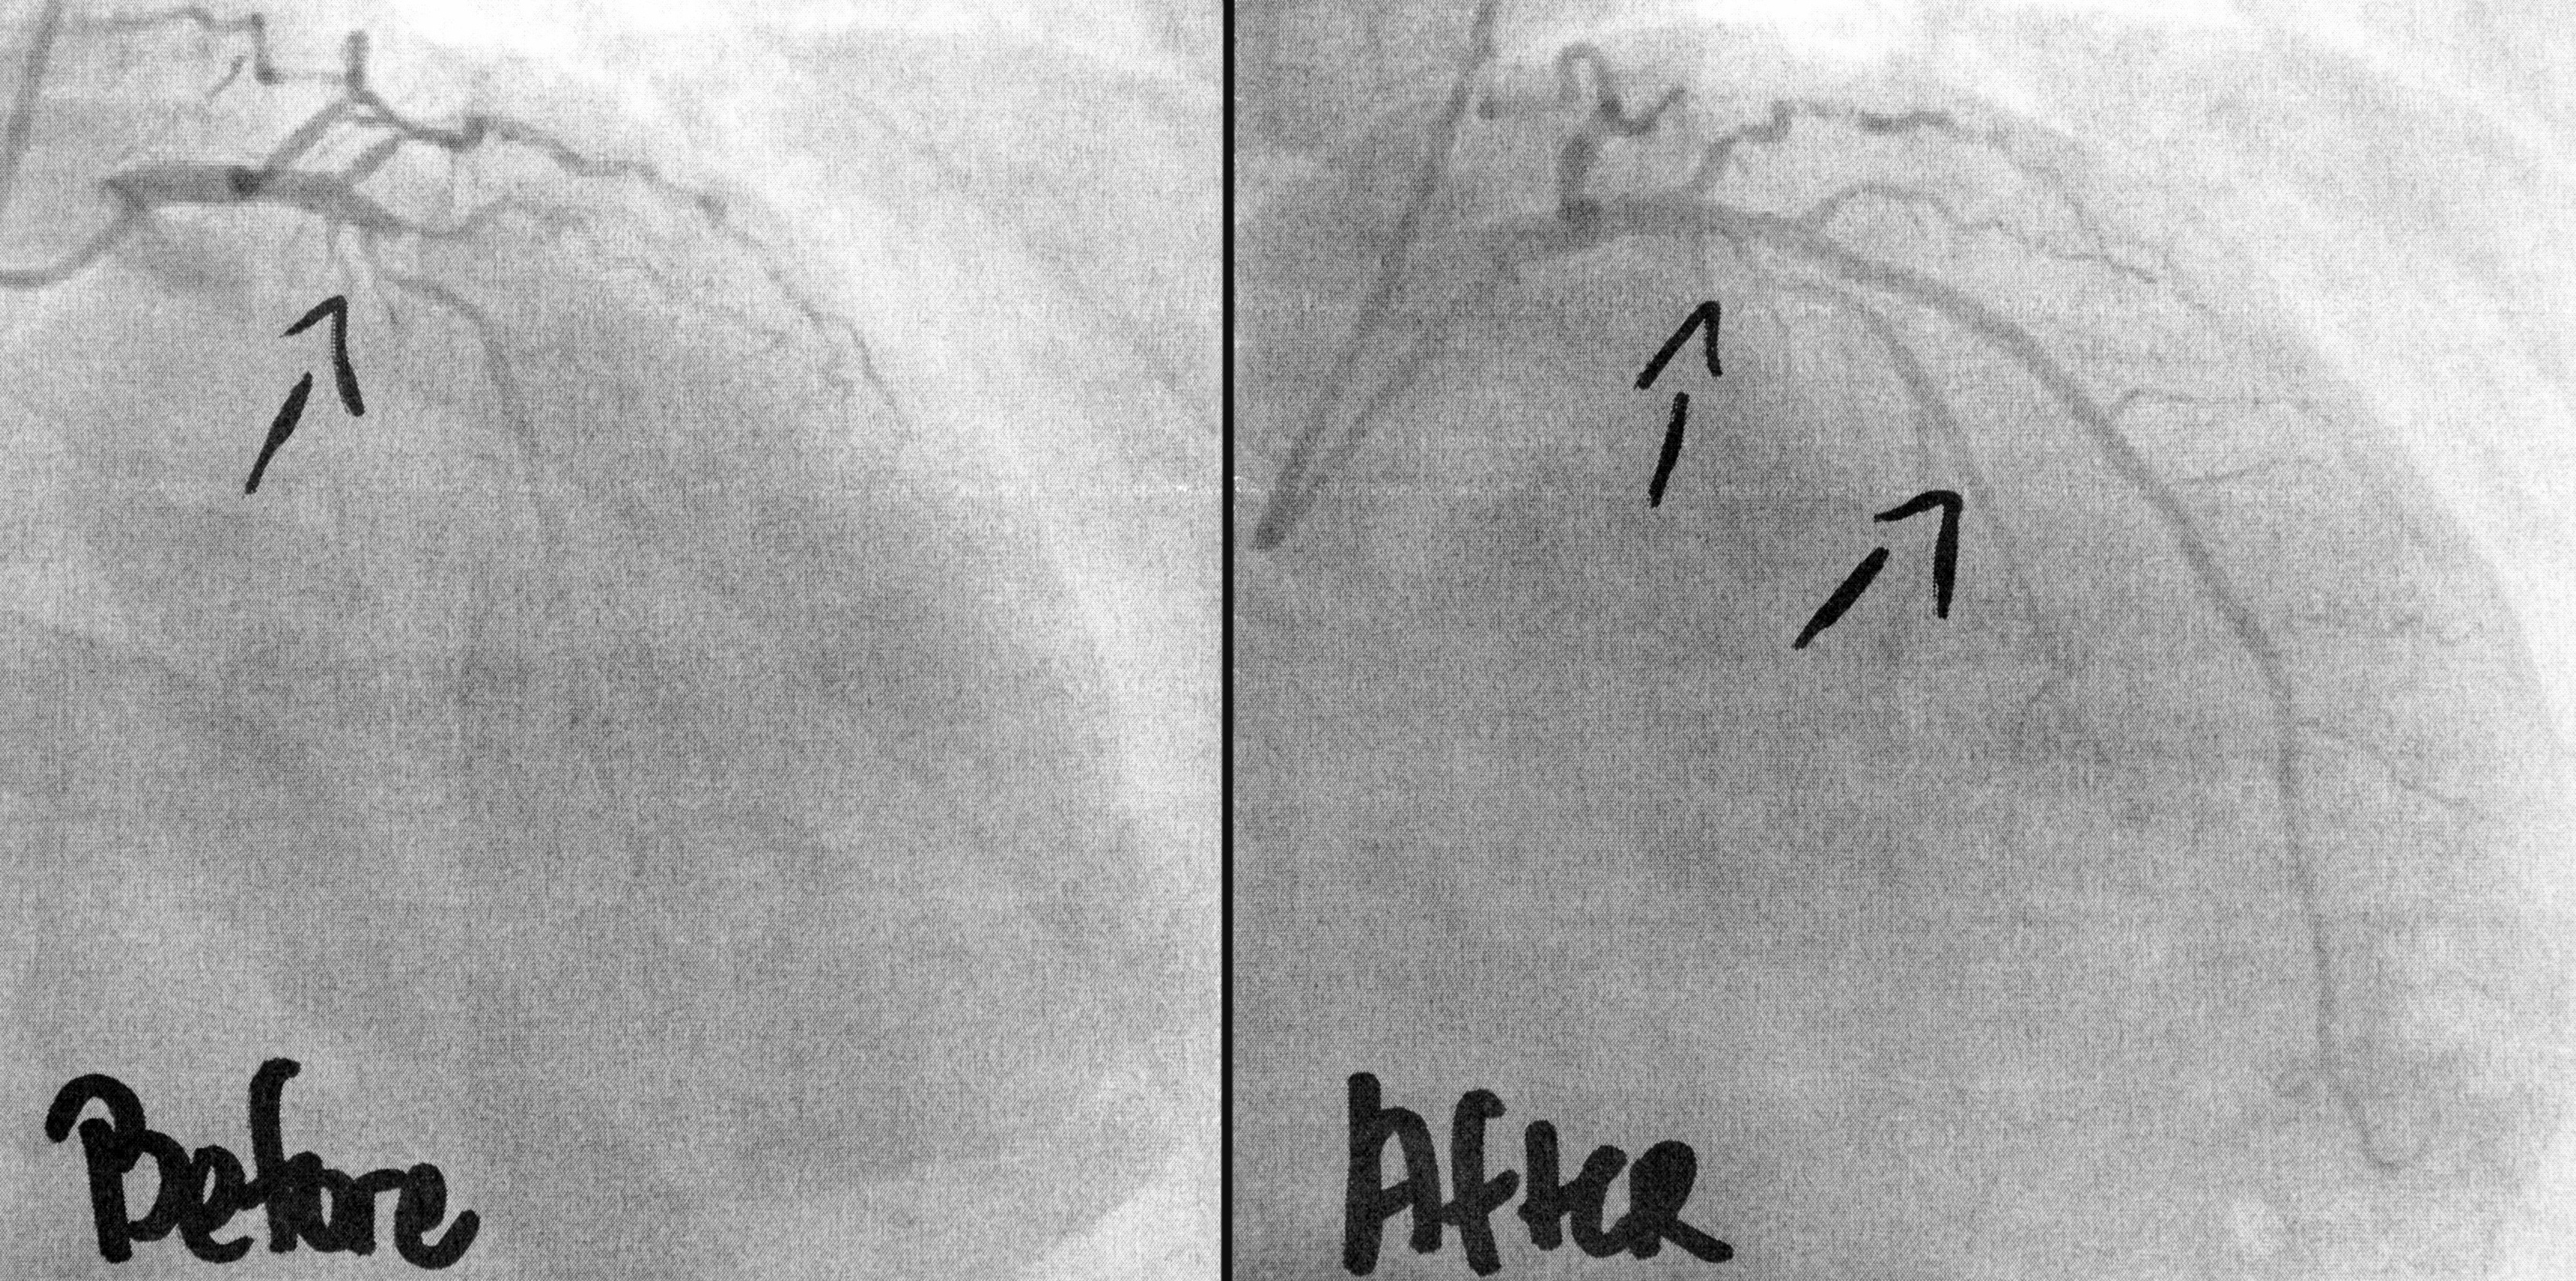 An image of a CT coronary angiogram